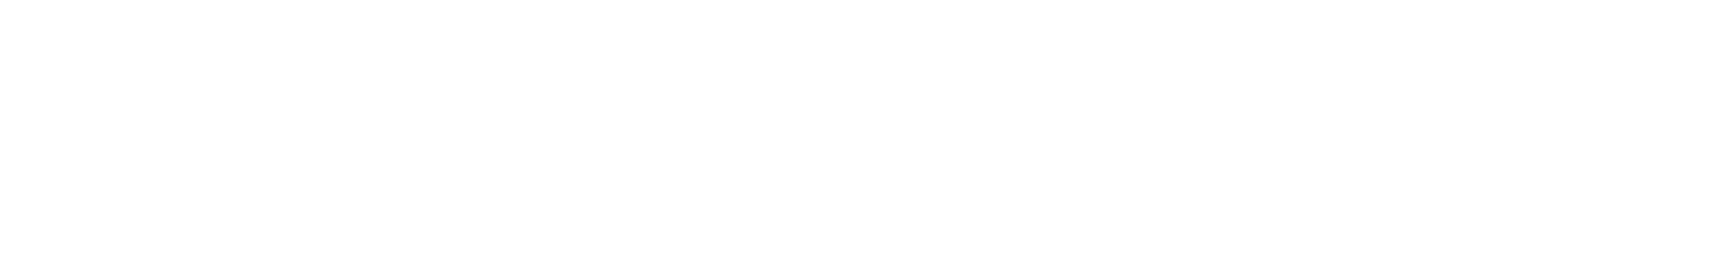 Shannon & Wilson logo